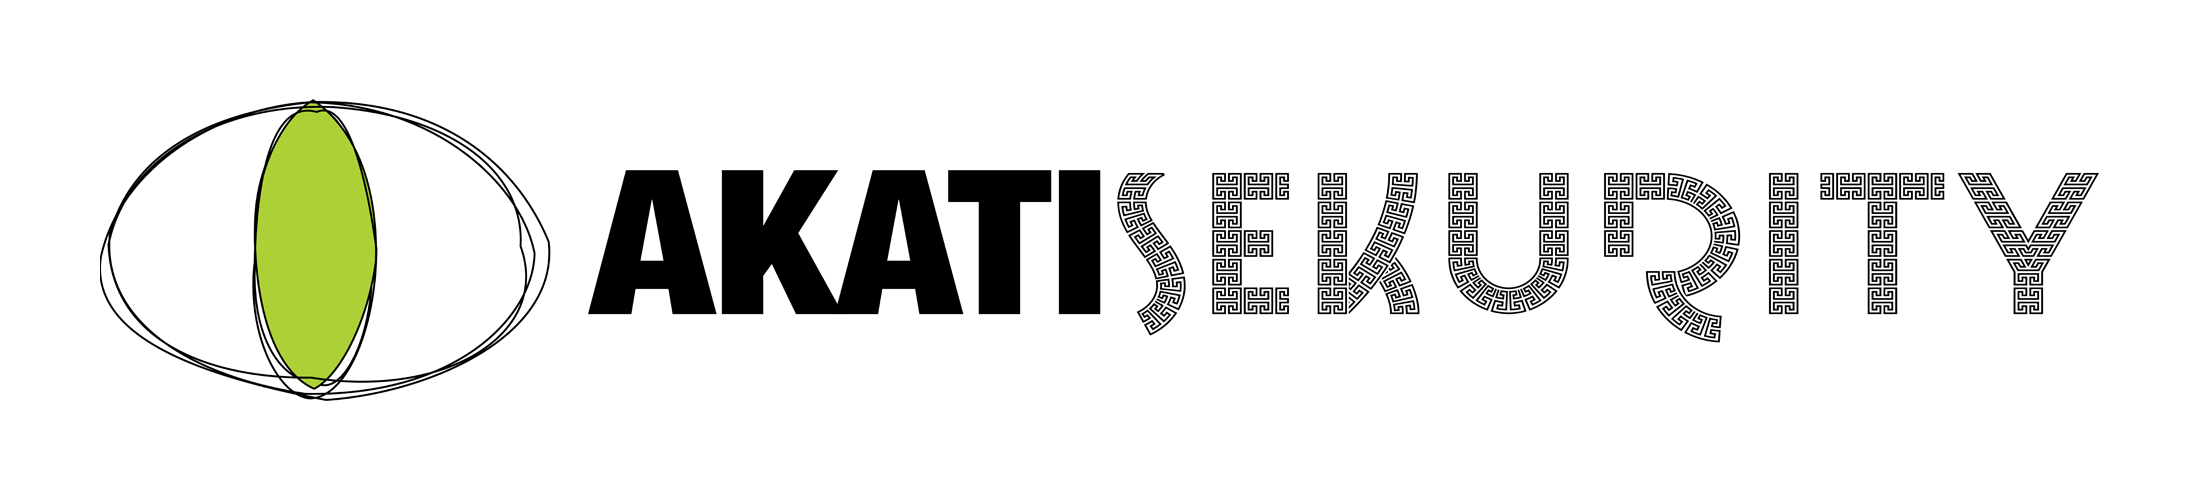 AKATI-Sekurity-logo-horizontal-black-optimize